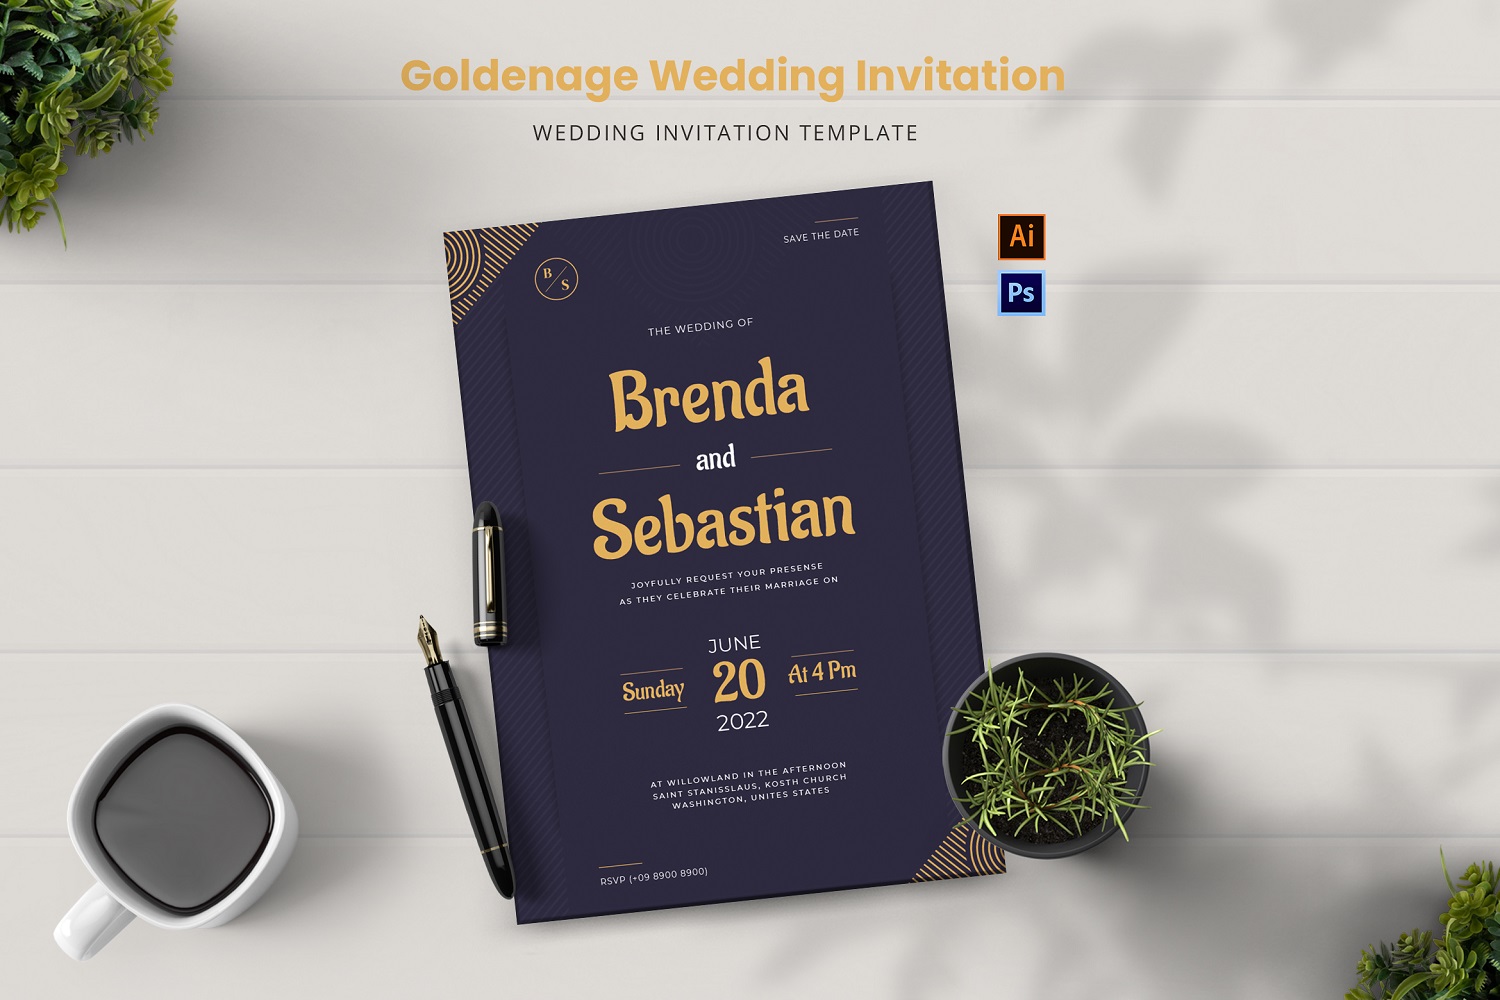 Goldenage Wedding Invitation